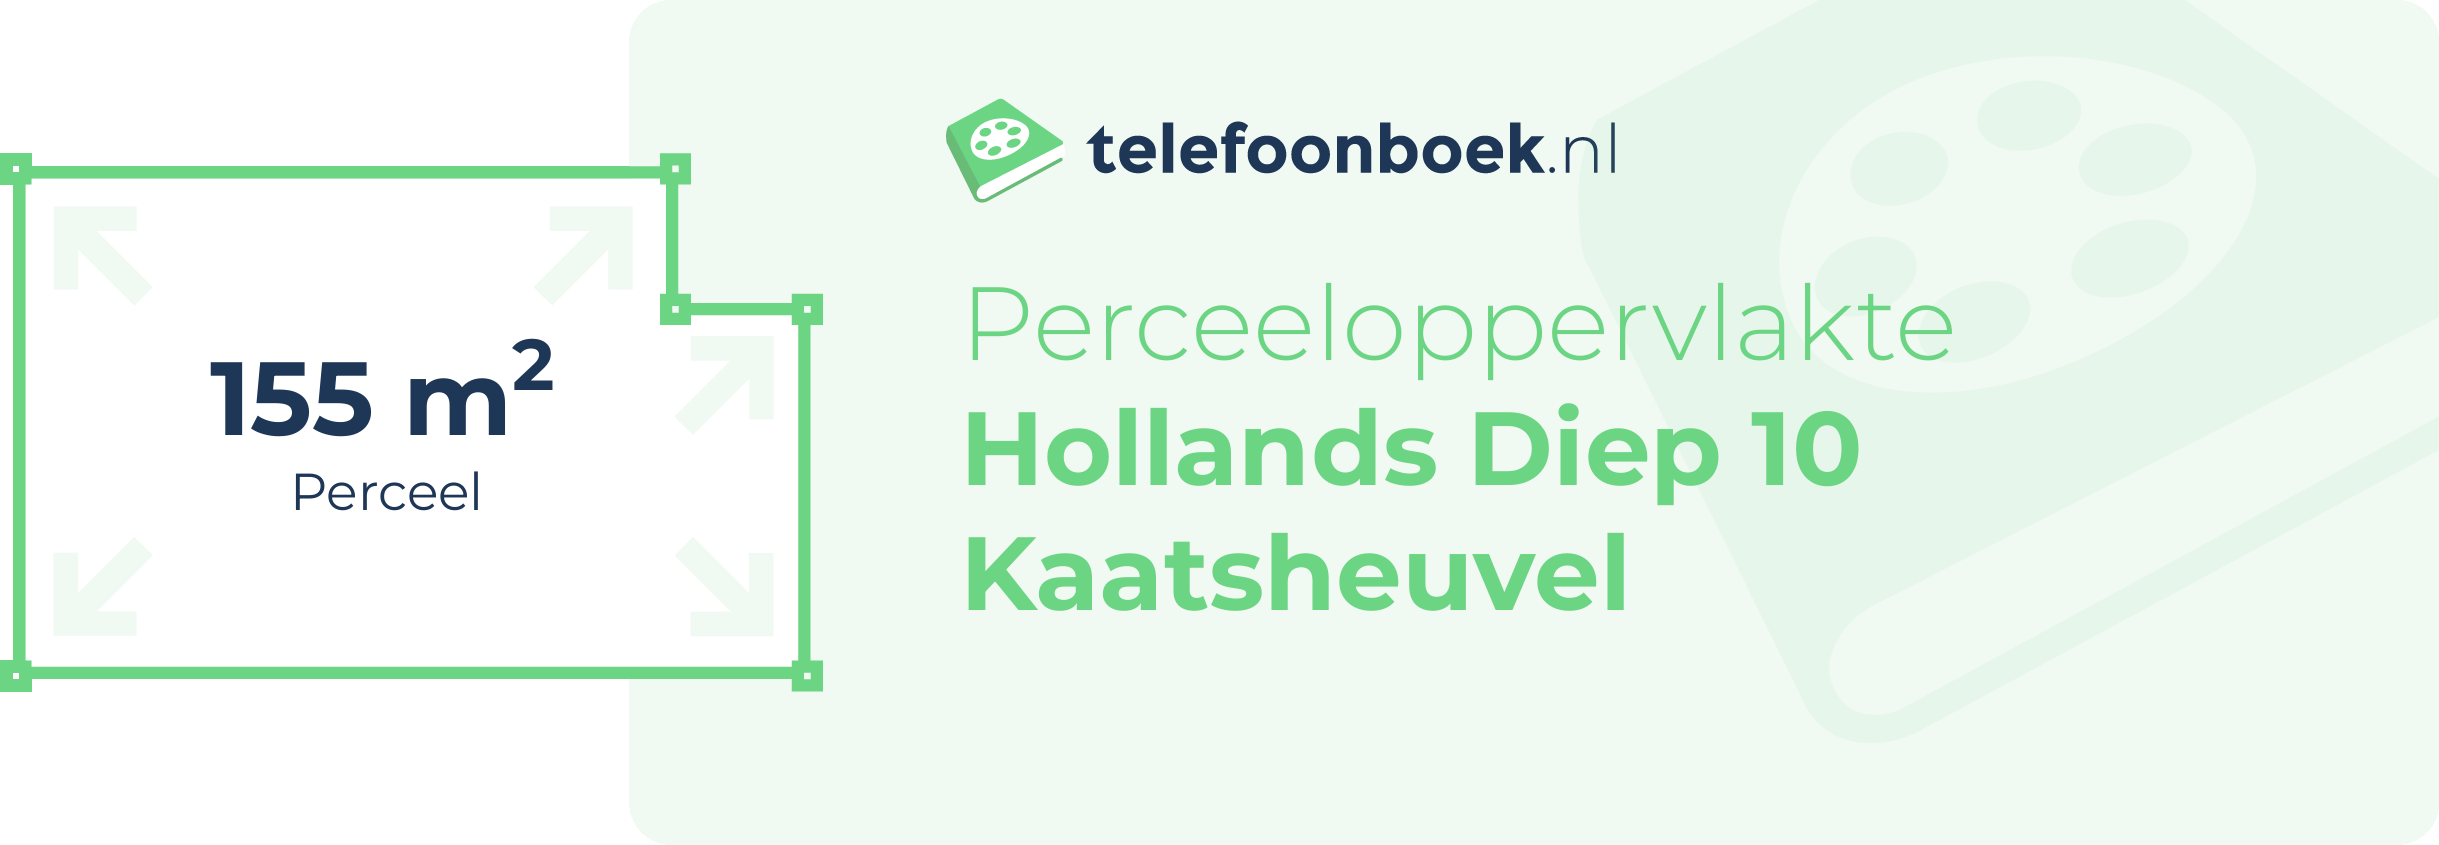 Perceeloppervlakte Hollands Diep 10 Kaatsheuvel